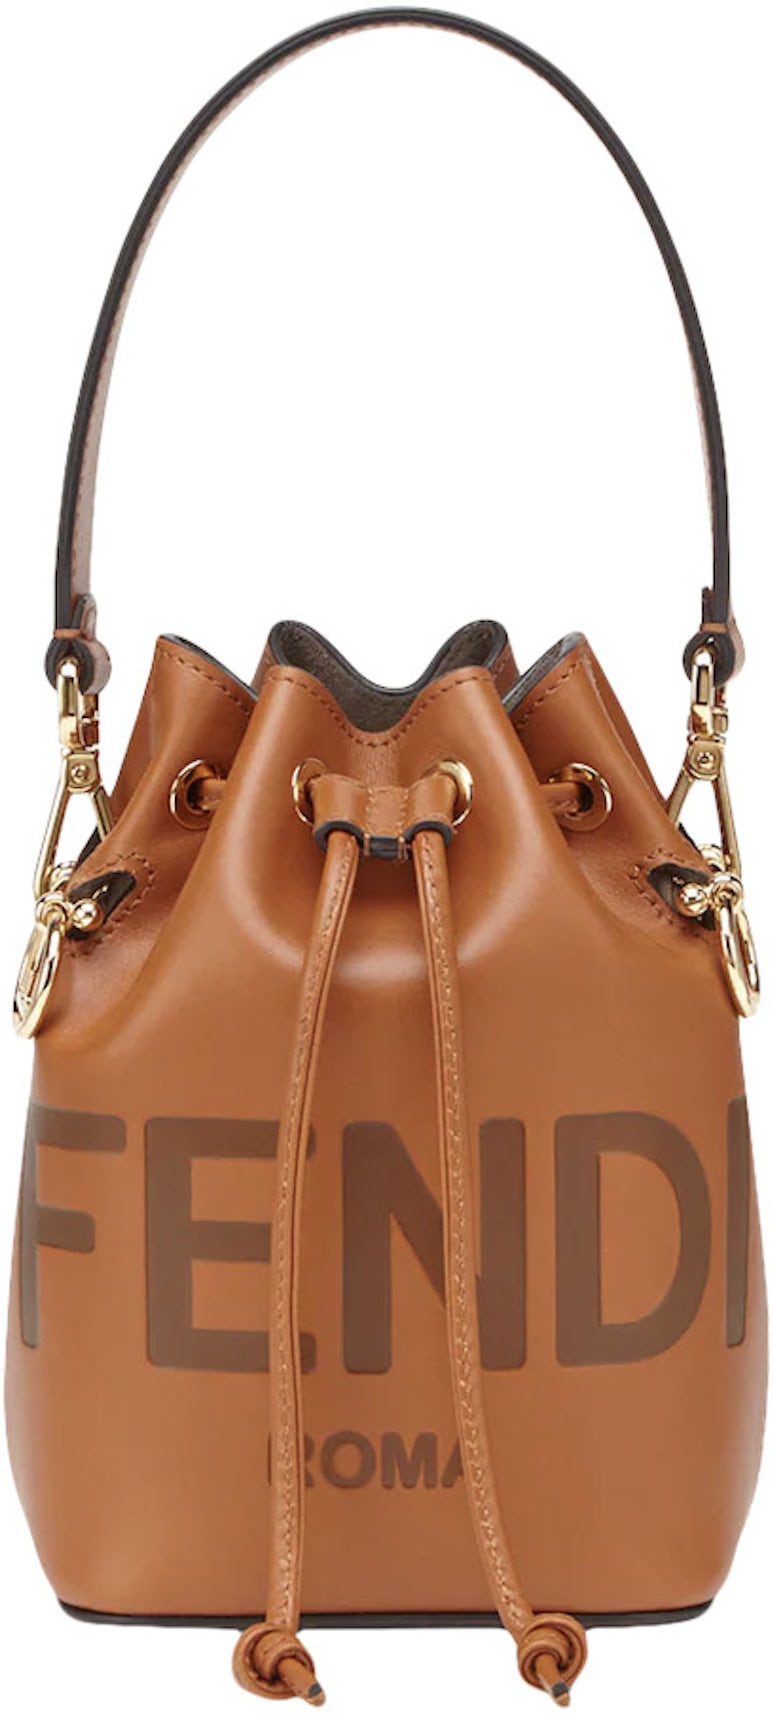 Mon trésor leather handbag Fendi Beige in Leather - 35651866